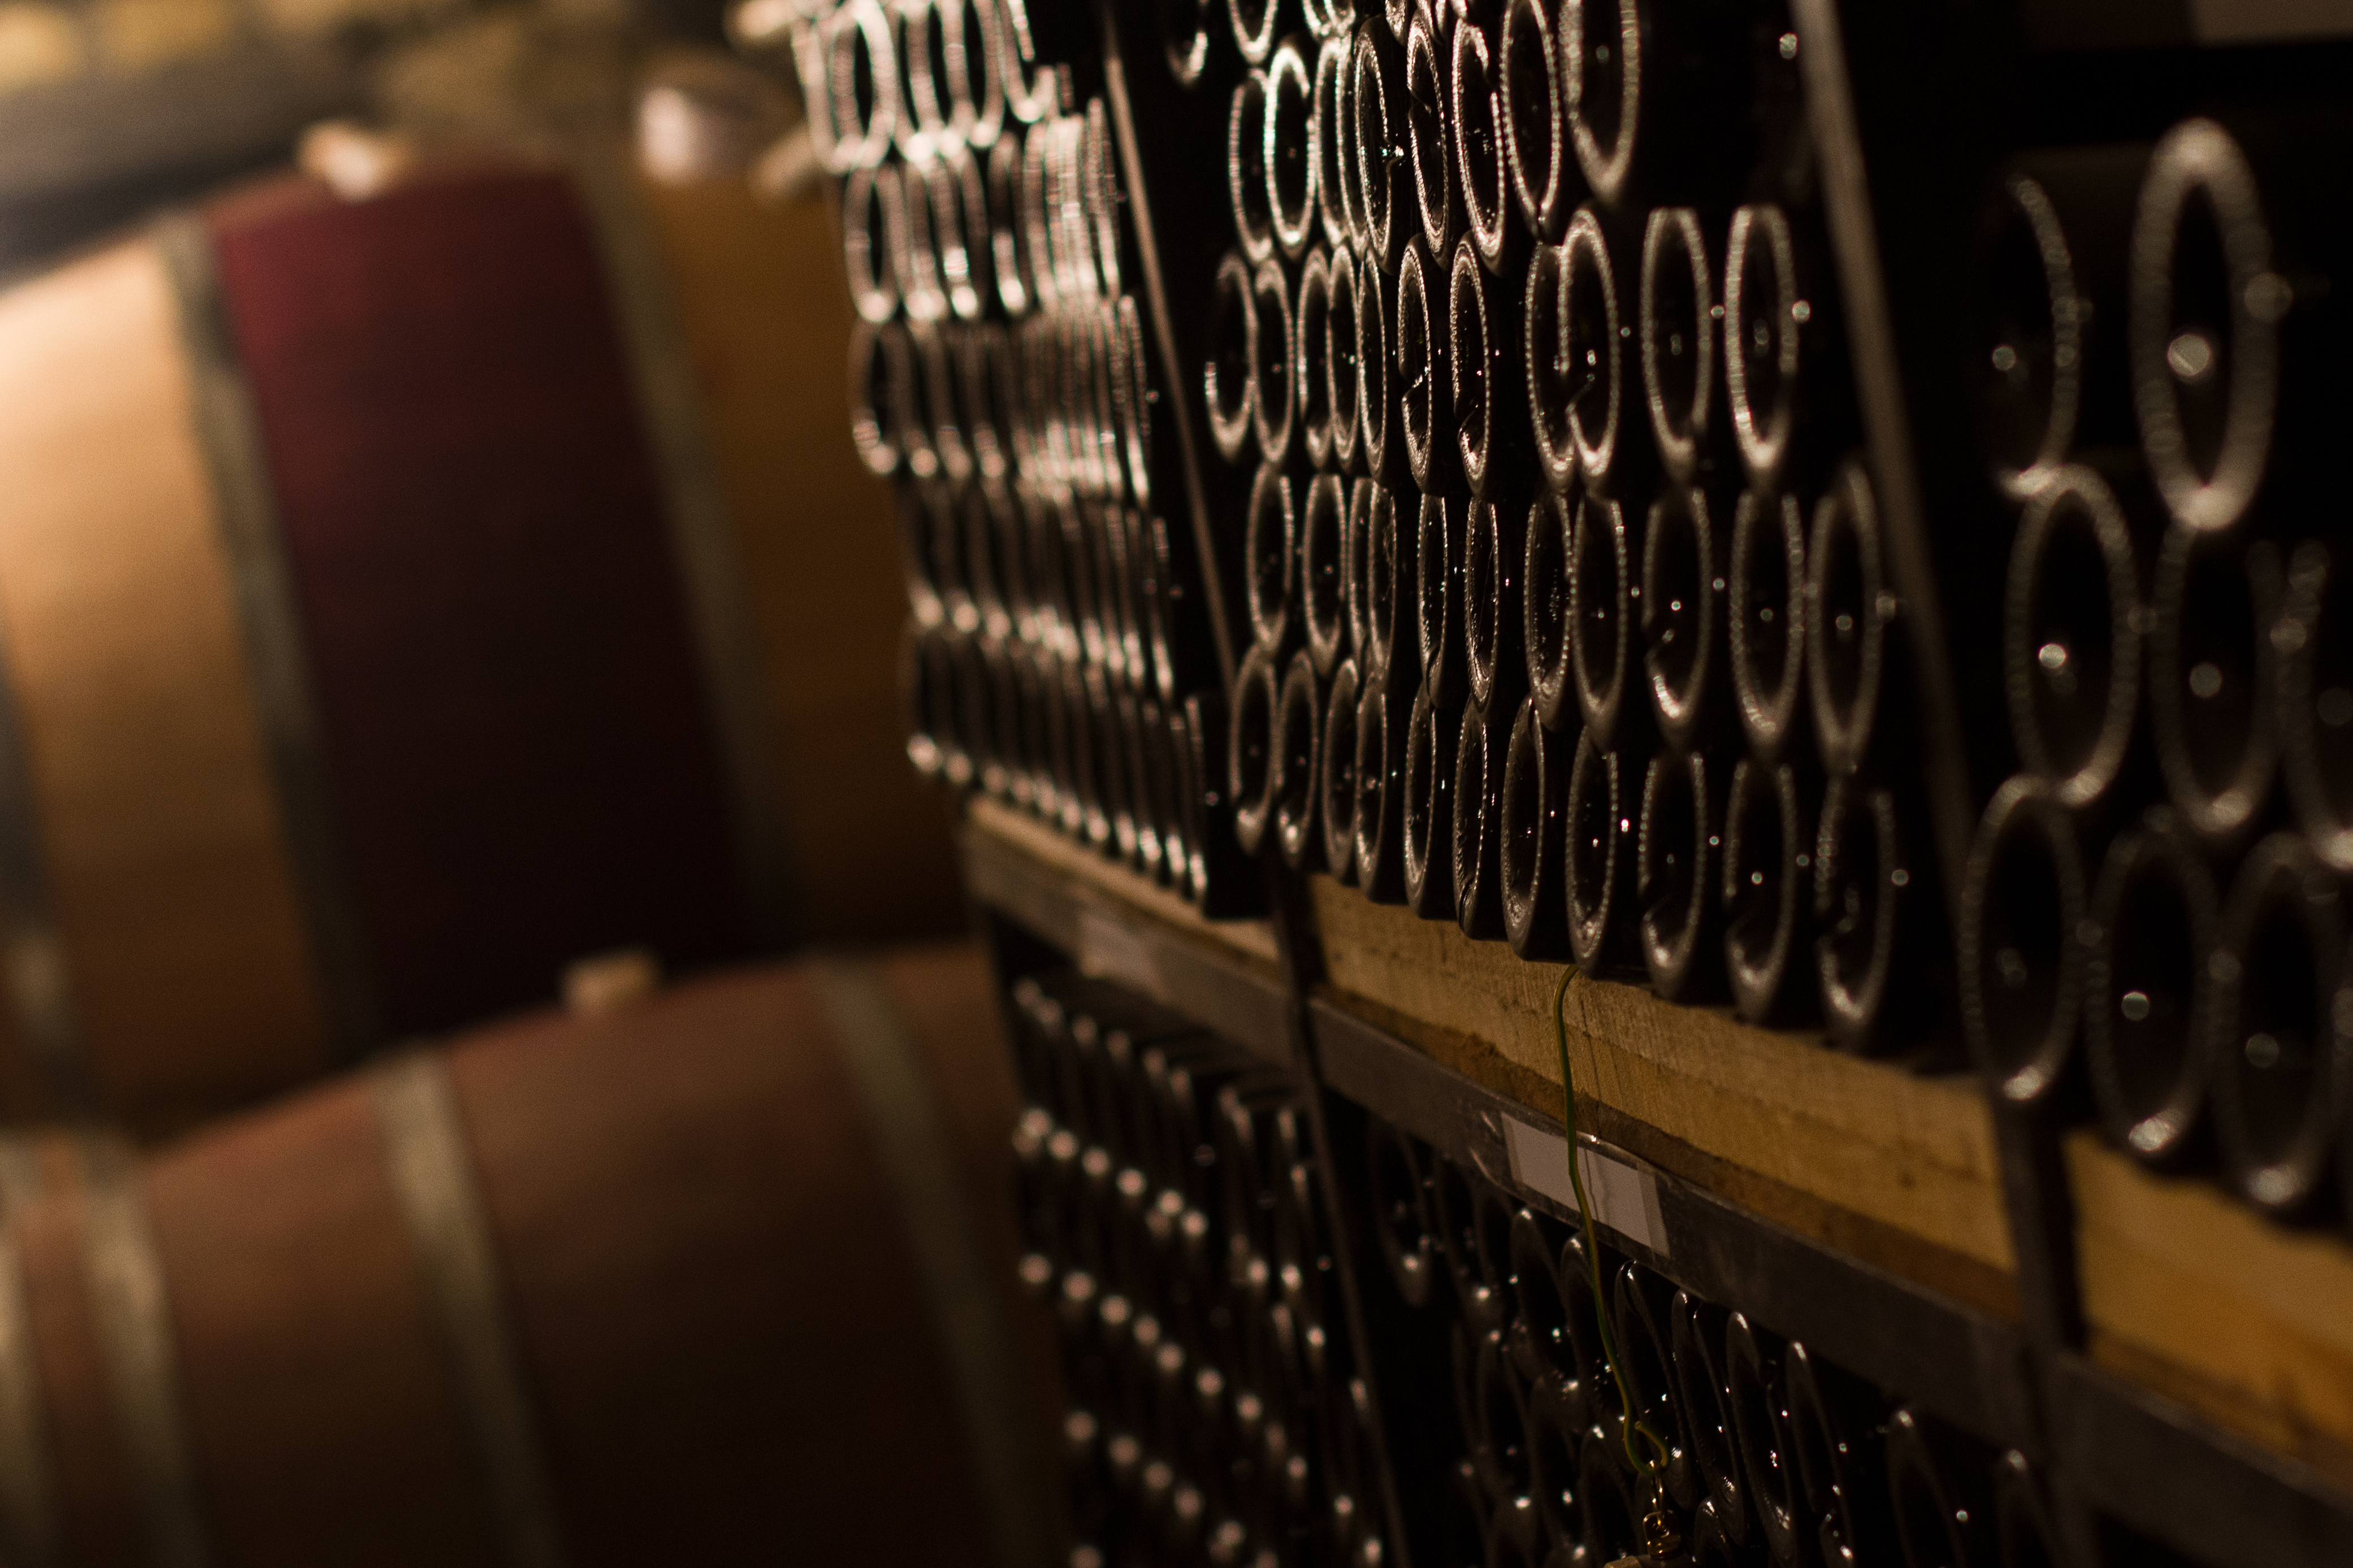 rows of vintage wine bottles in a wine cellar